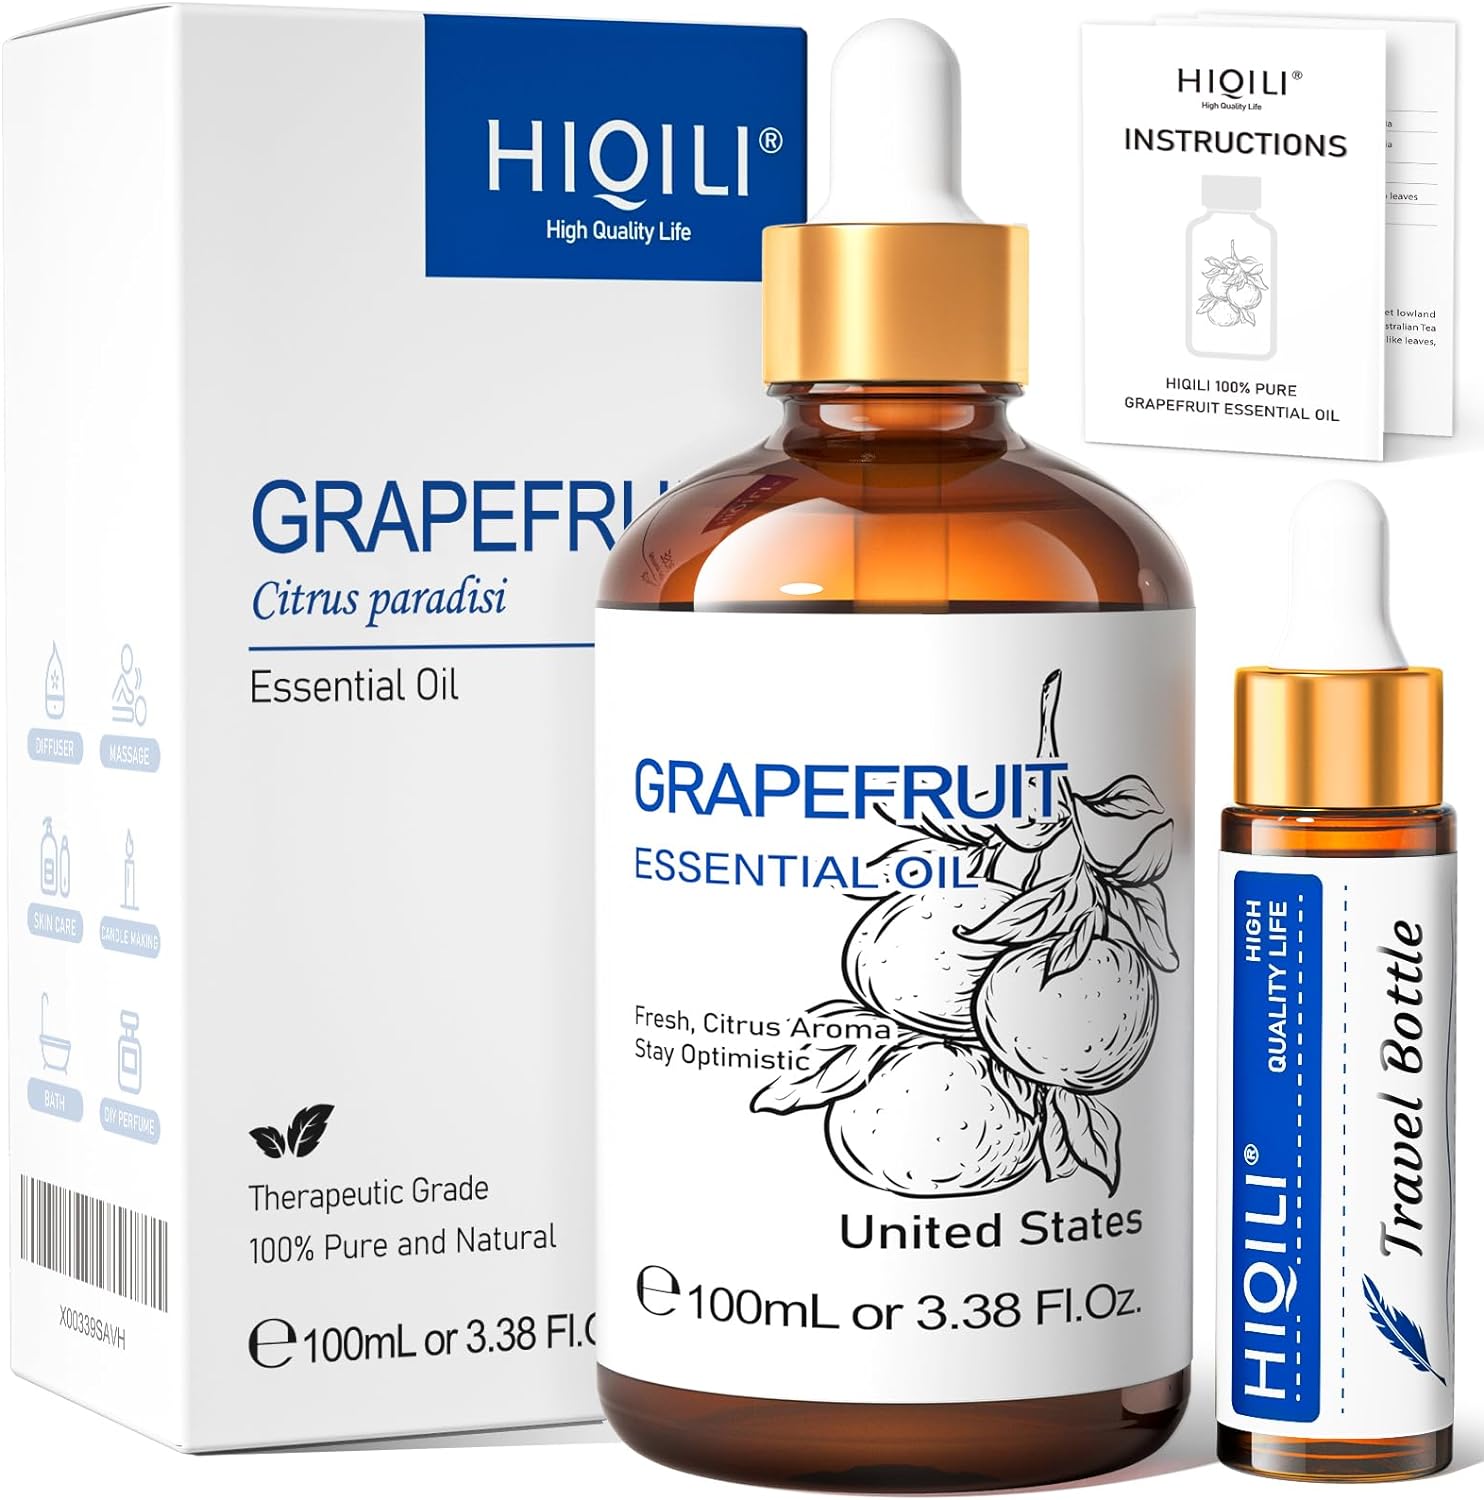 HIQILI Grapefruit Essential Oil 3.38 Fl Oz, Pure Natural Grapefruit Oil for Diffuser, Hair Care - 100ml